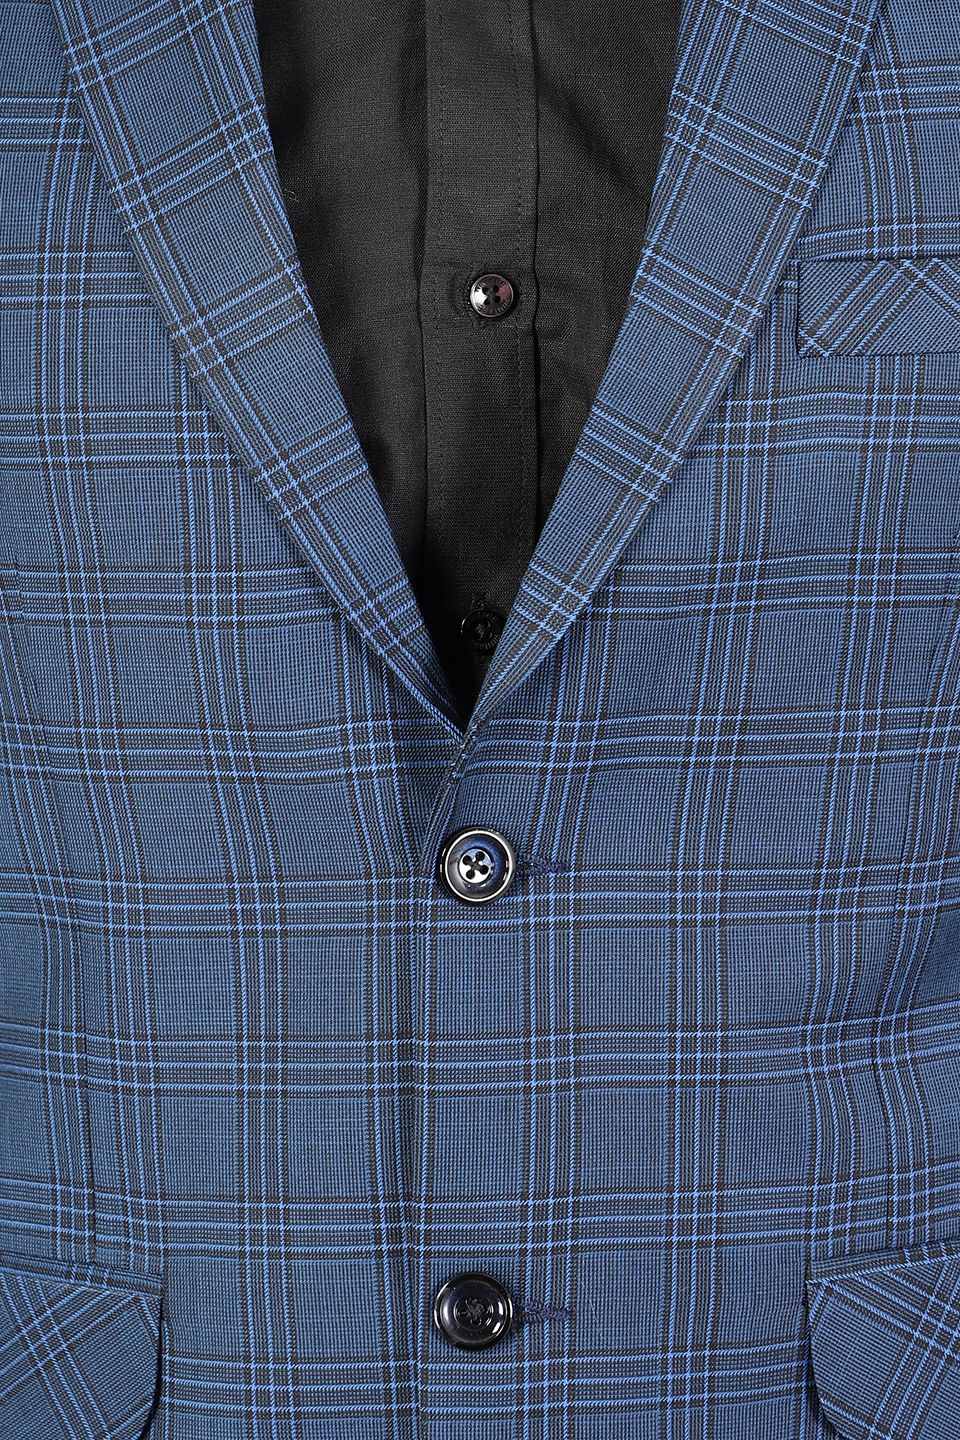 PV Wool Checkered Blue Blazer